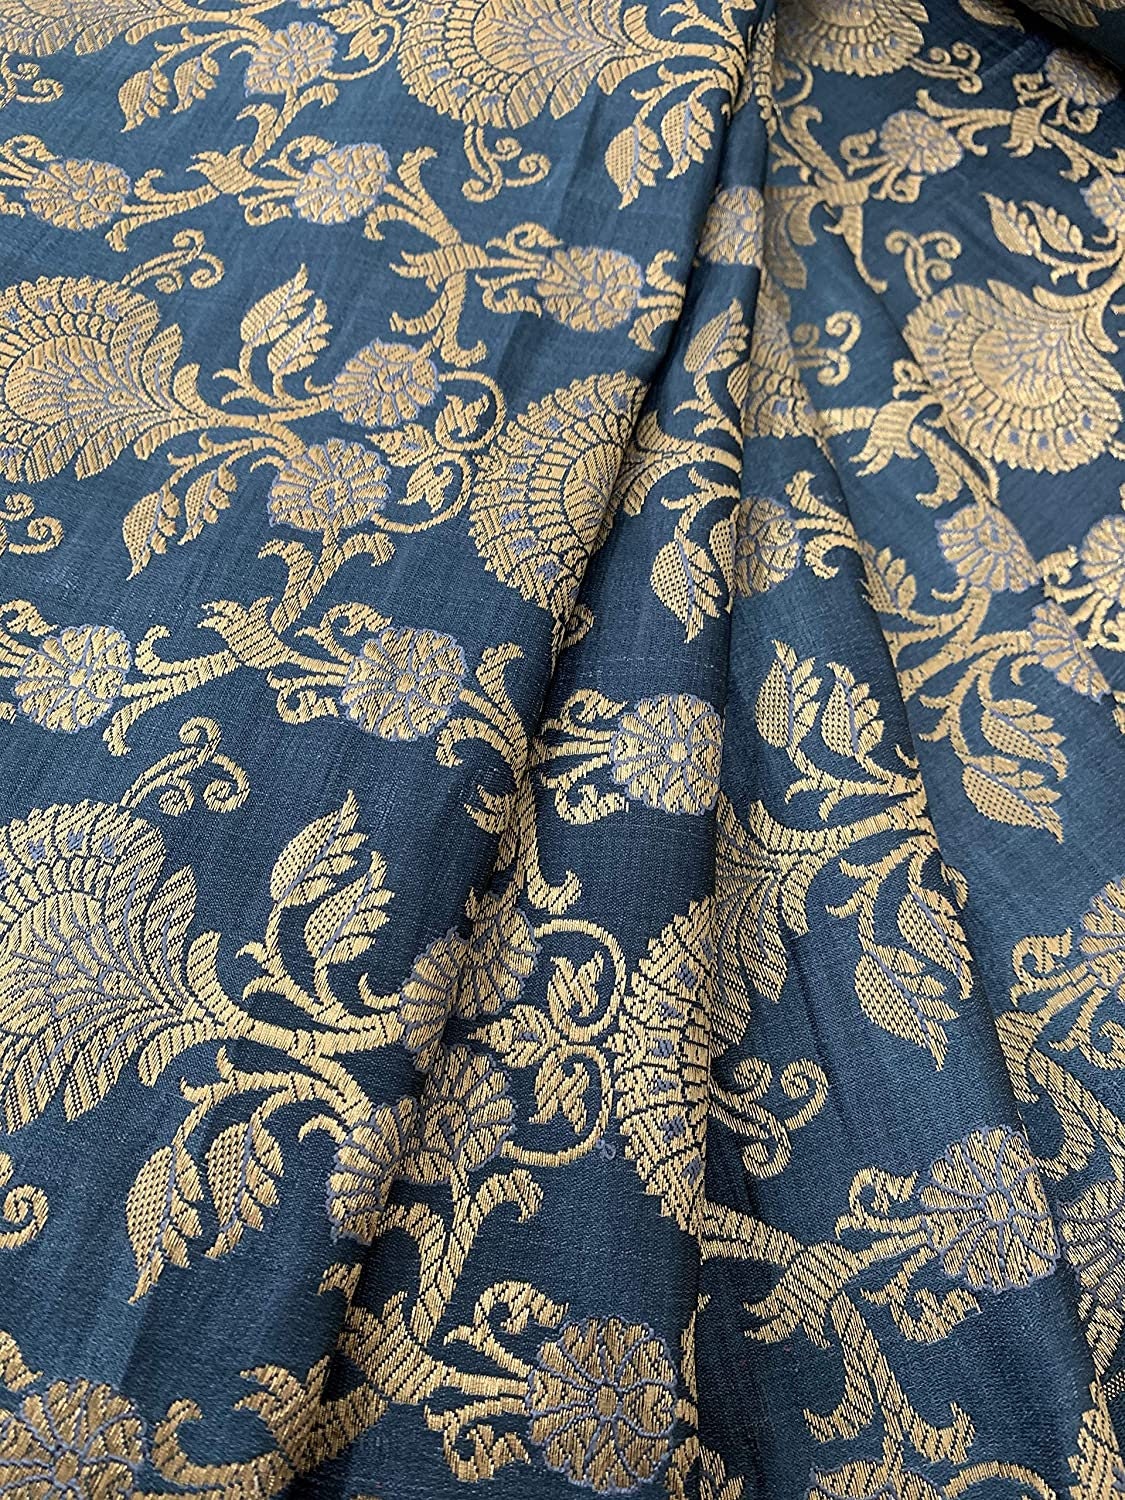 Ornamental Floral Gold Metallic Print Indian Banarasi Brocade Fabric (Marl Grey)